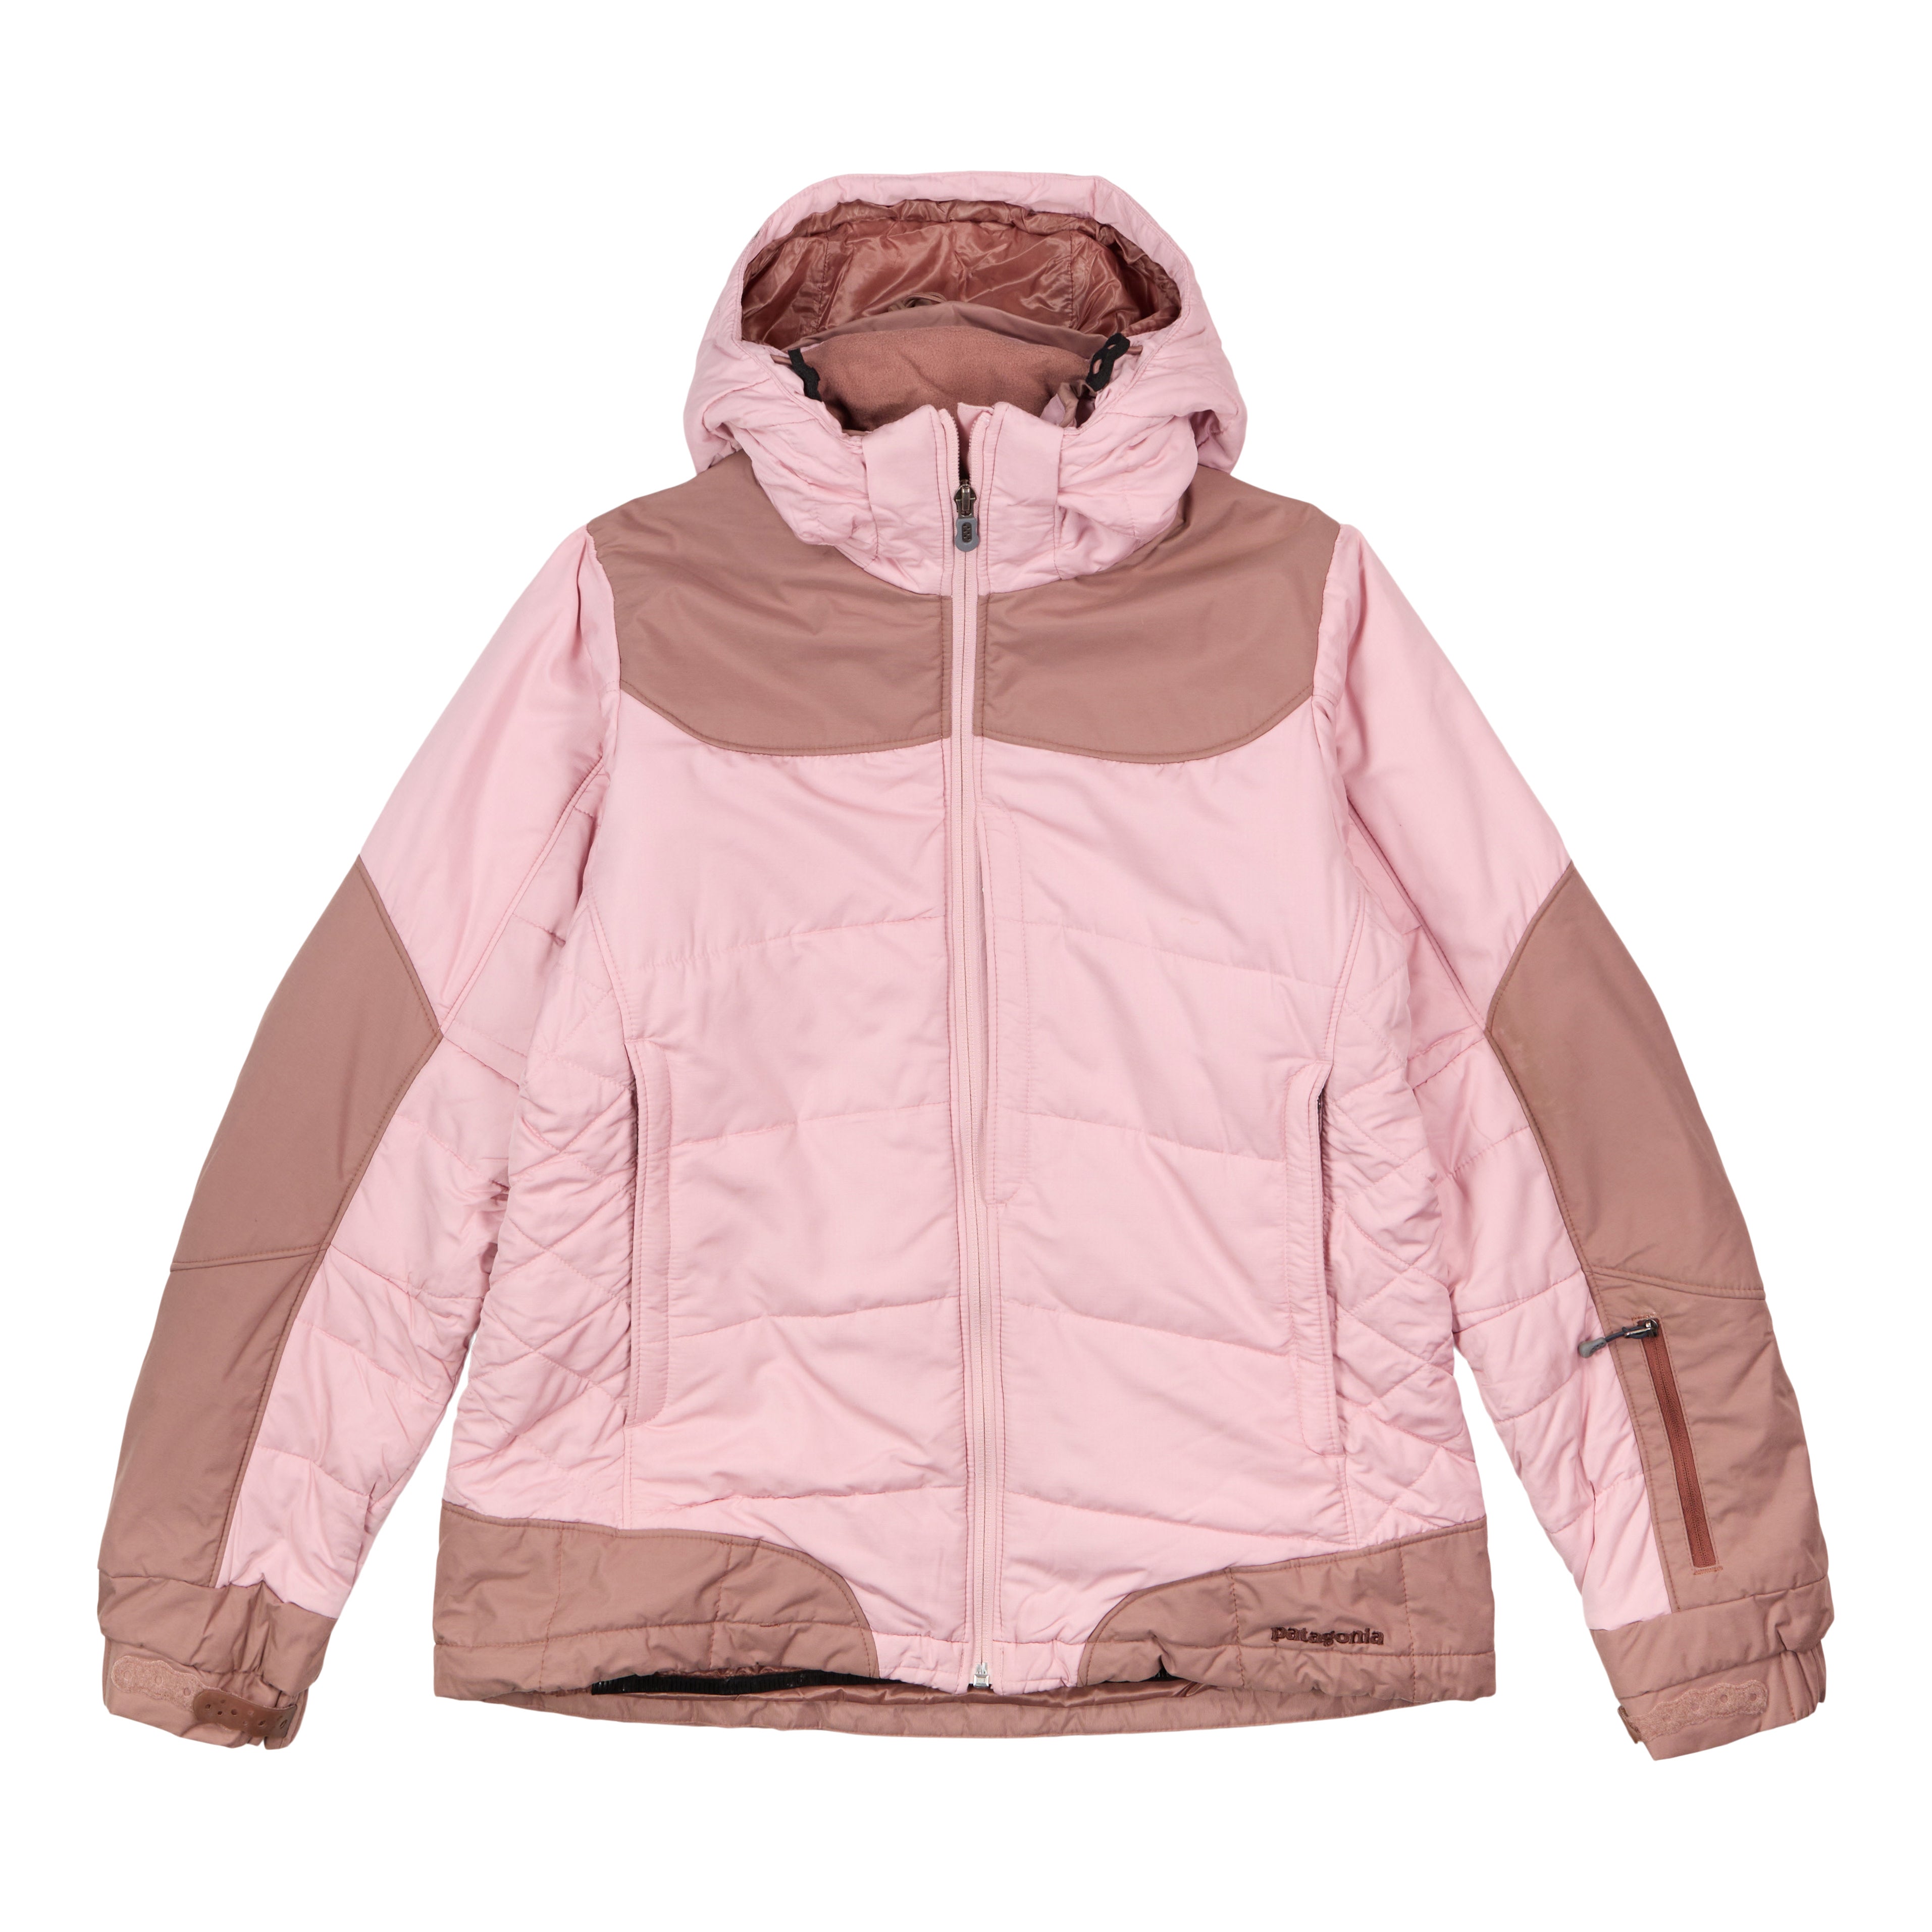 patagonia puff rider jacket Lサイズ - ファッション